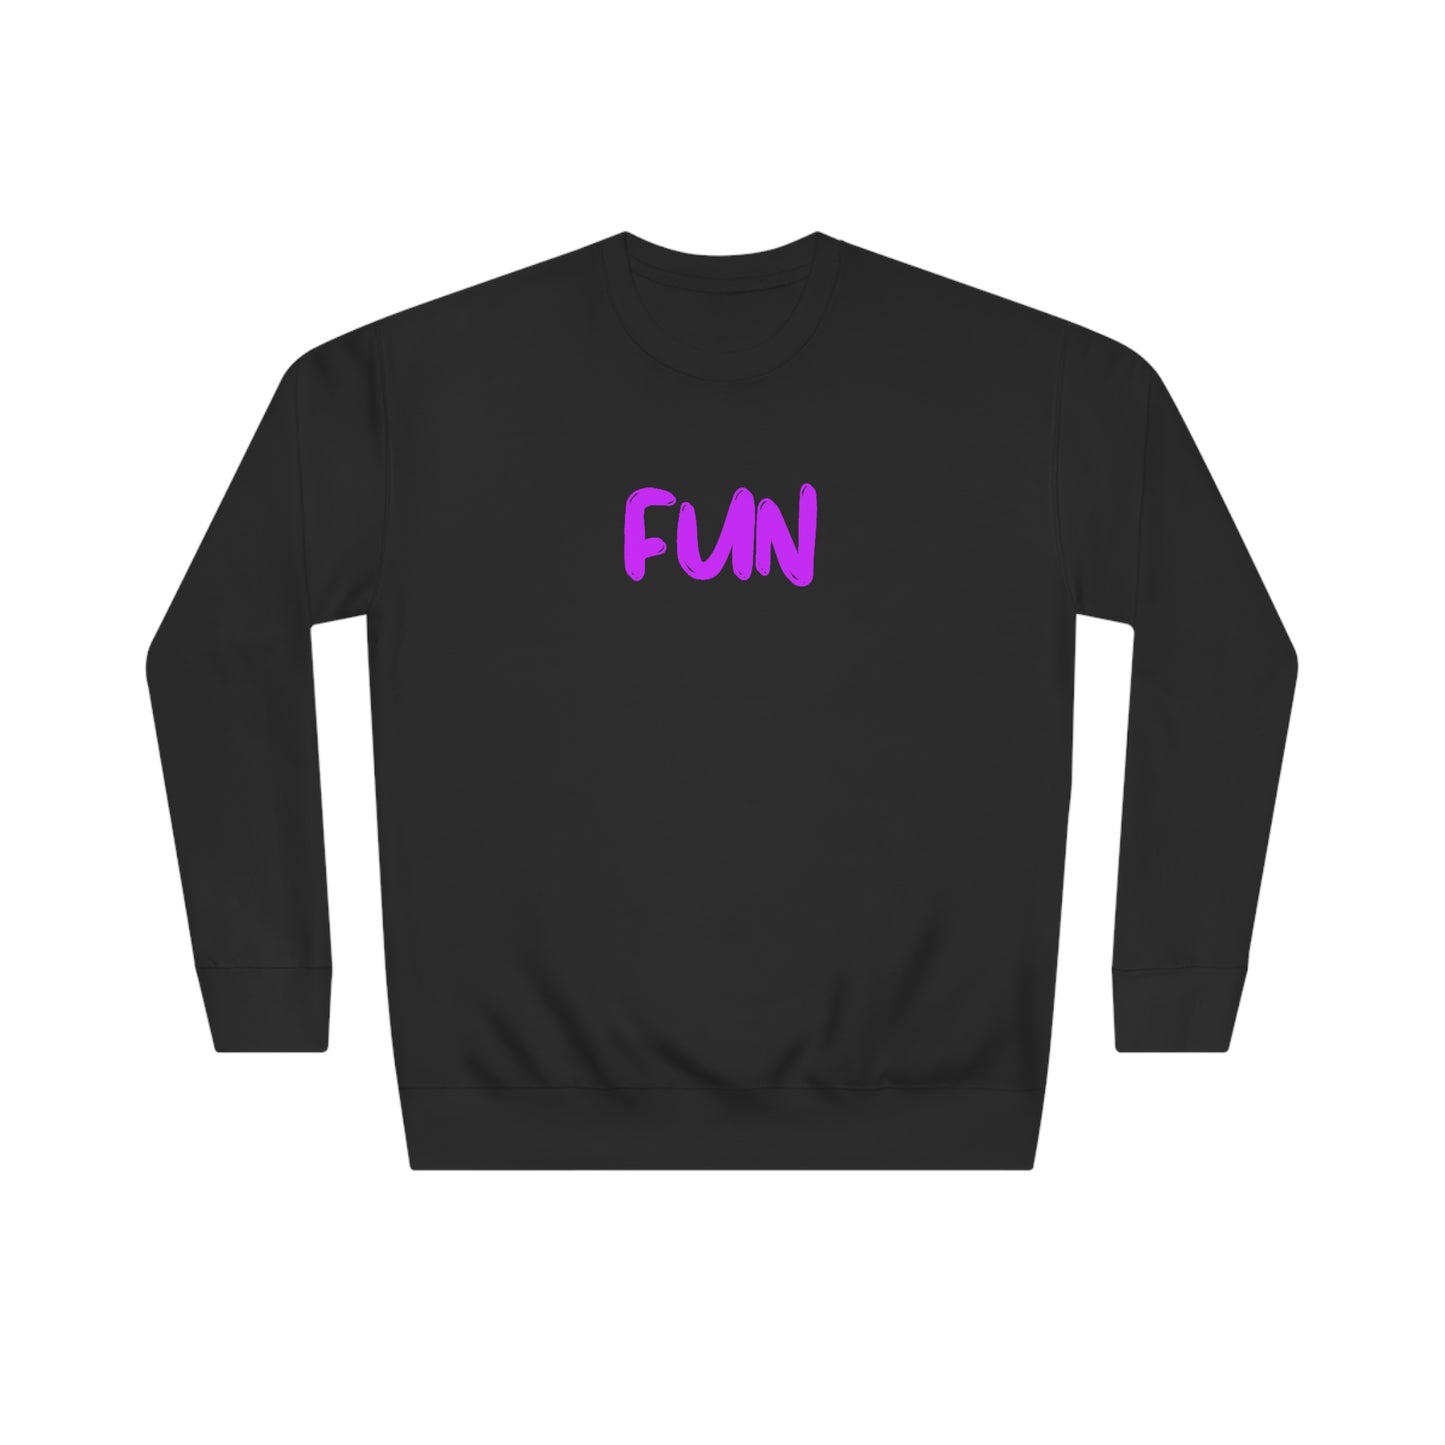 FUN - Unisex Crew Sweatshirt